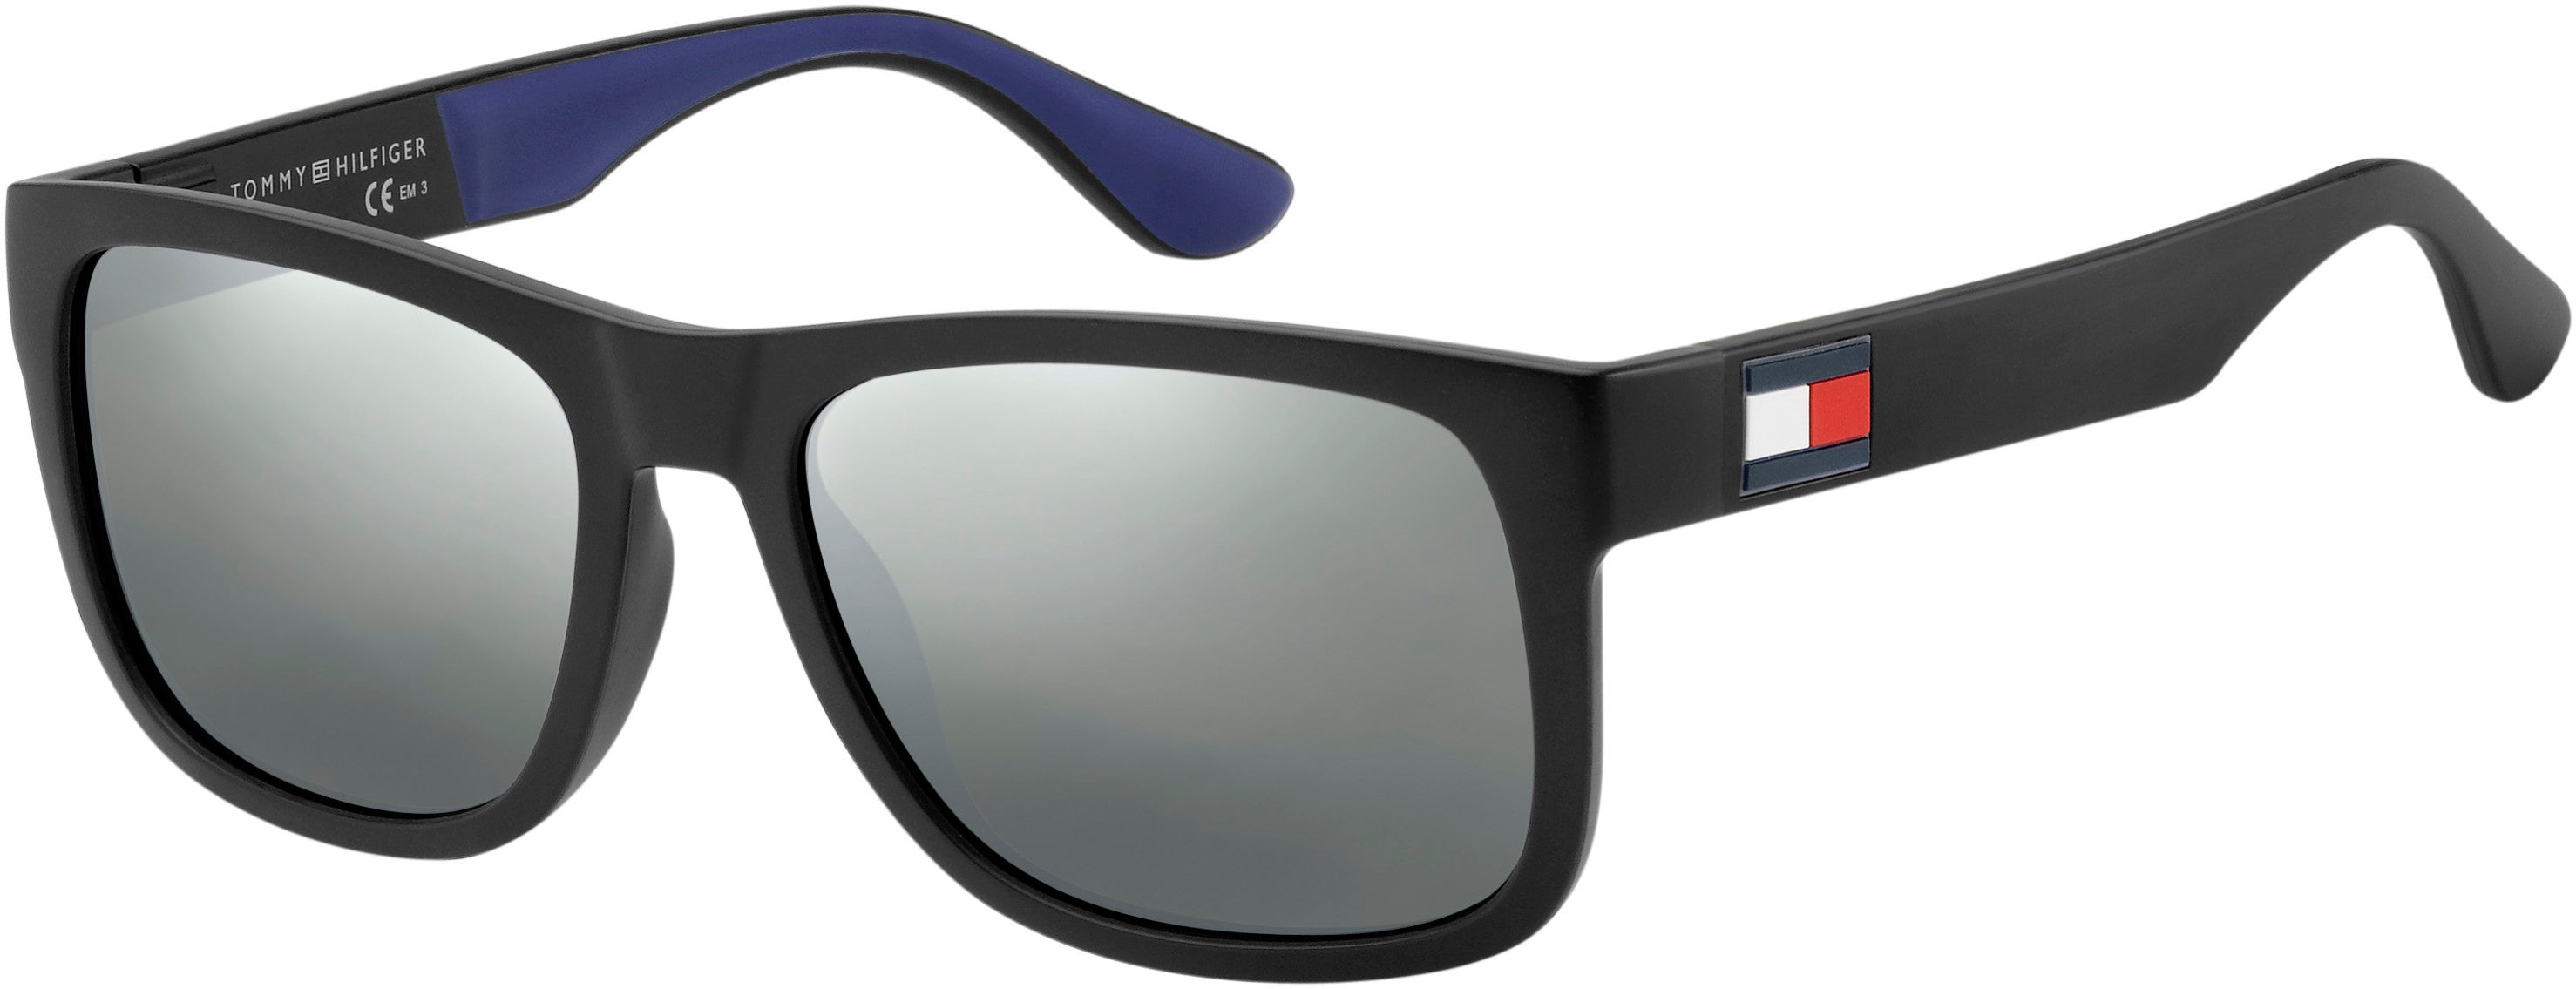 Tommy Hilfiger T. Hilfiger 1556/S Rectangular Sunglasses 0D51-0D51  Black Blue (T4 Silver Mirror)